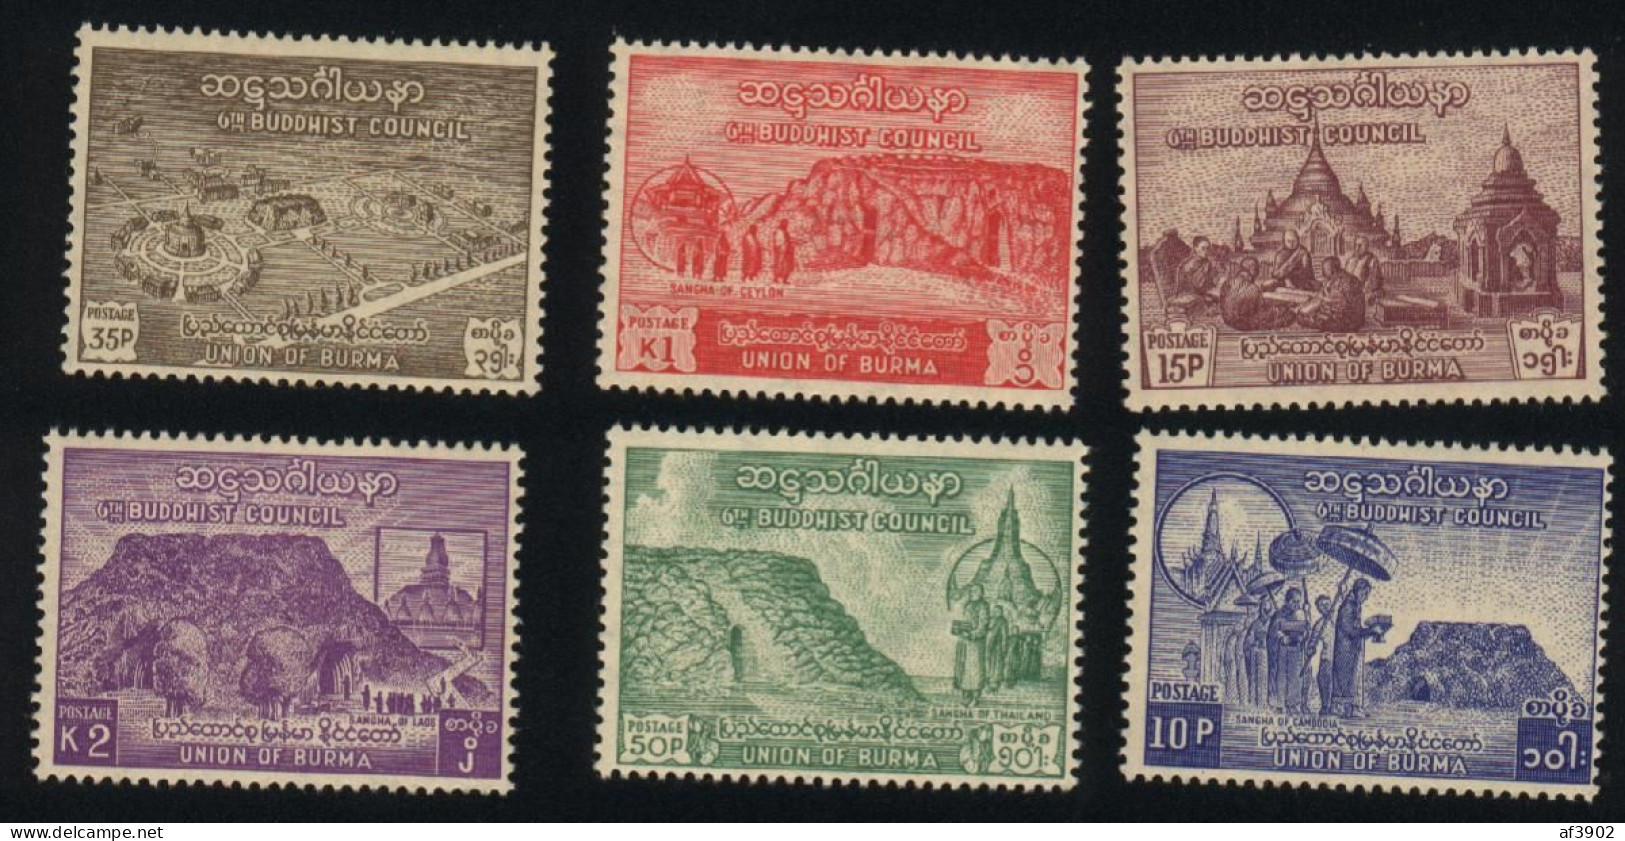 BURMA/MYANMAR STAMP 1954 ISSUED 6TH BUDDHA SEMINAR COMPLETE SET, MNH - Myanmar (Burma 1948-...)